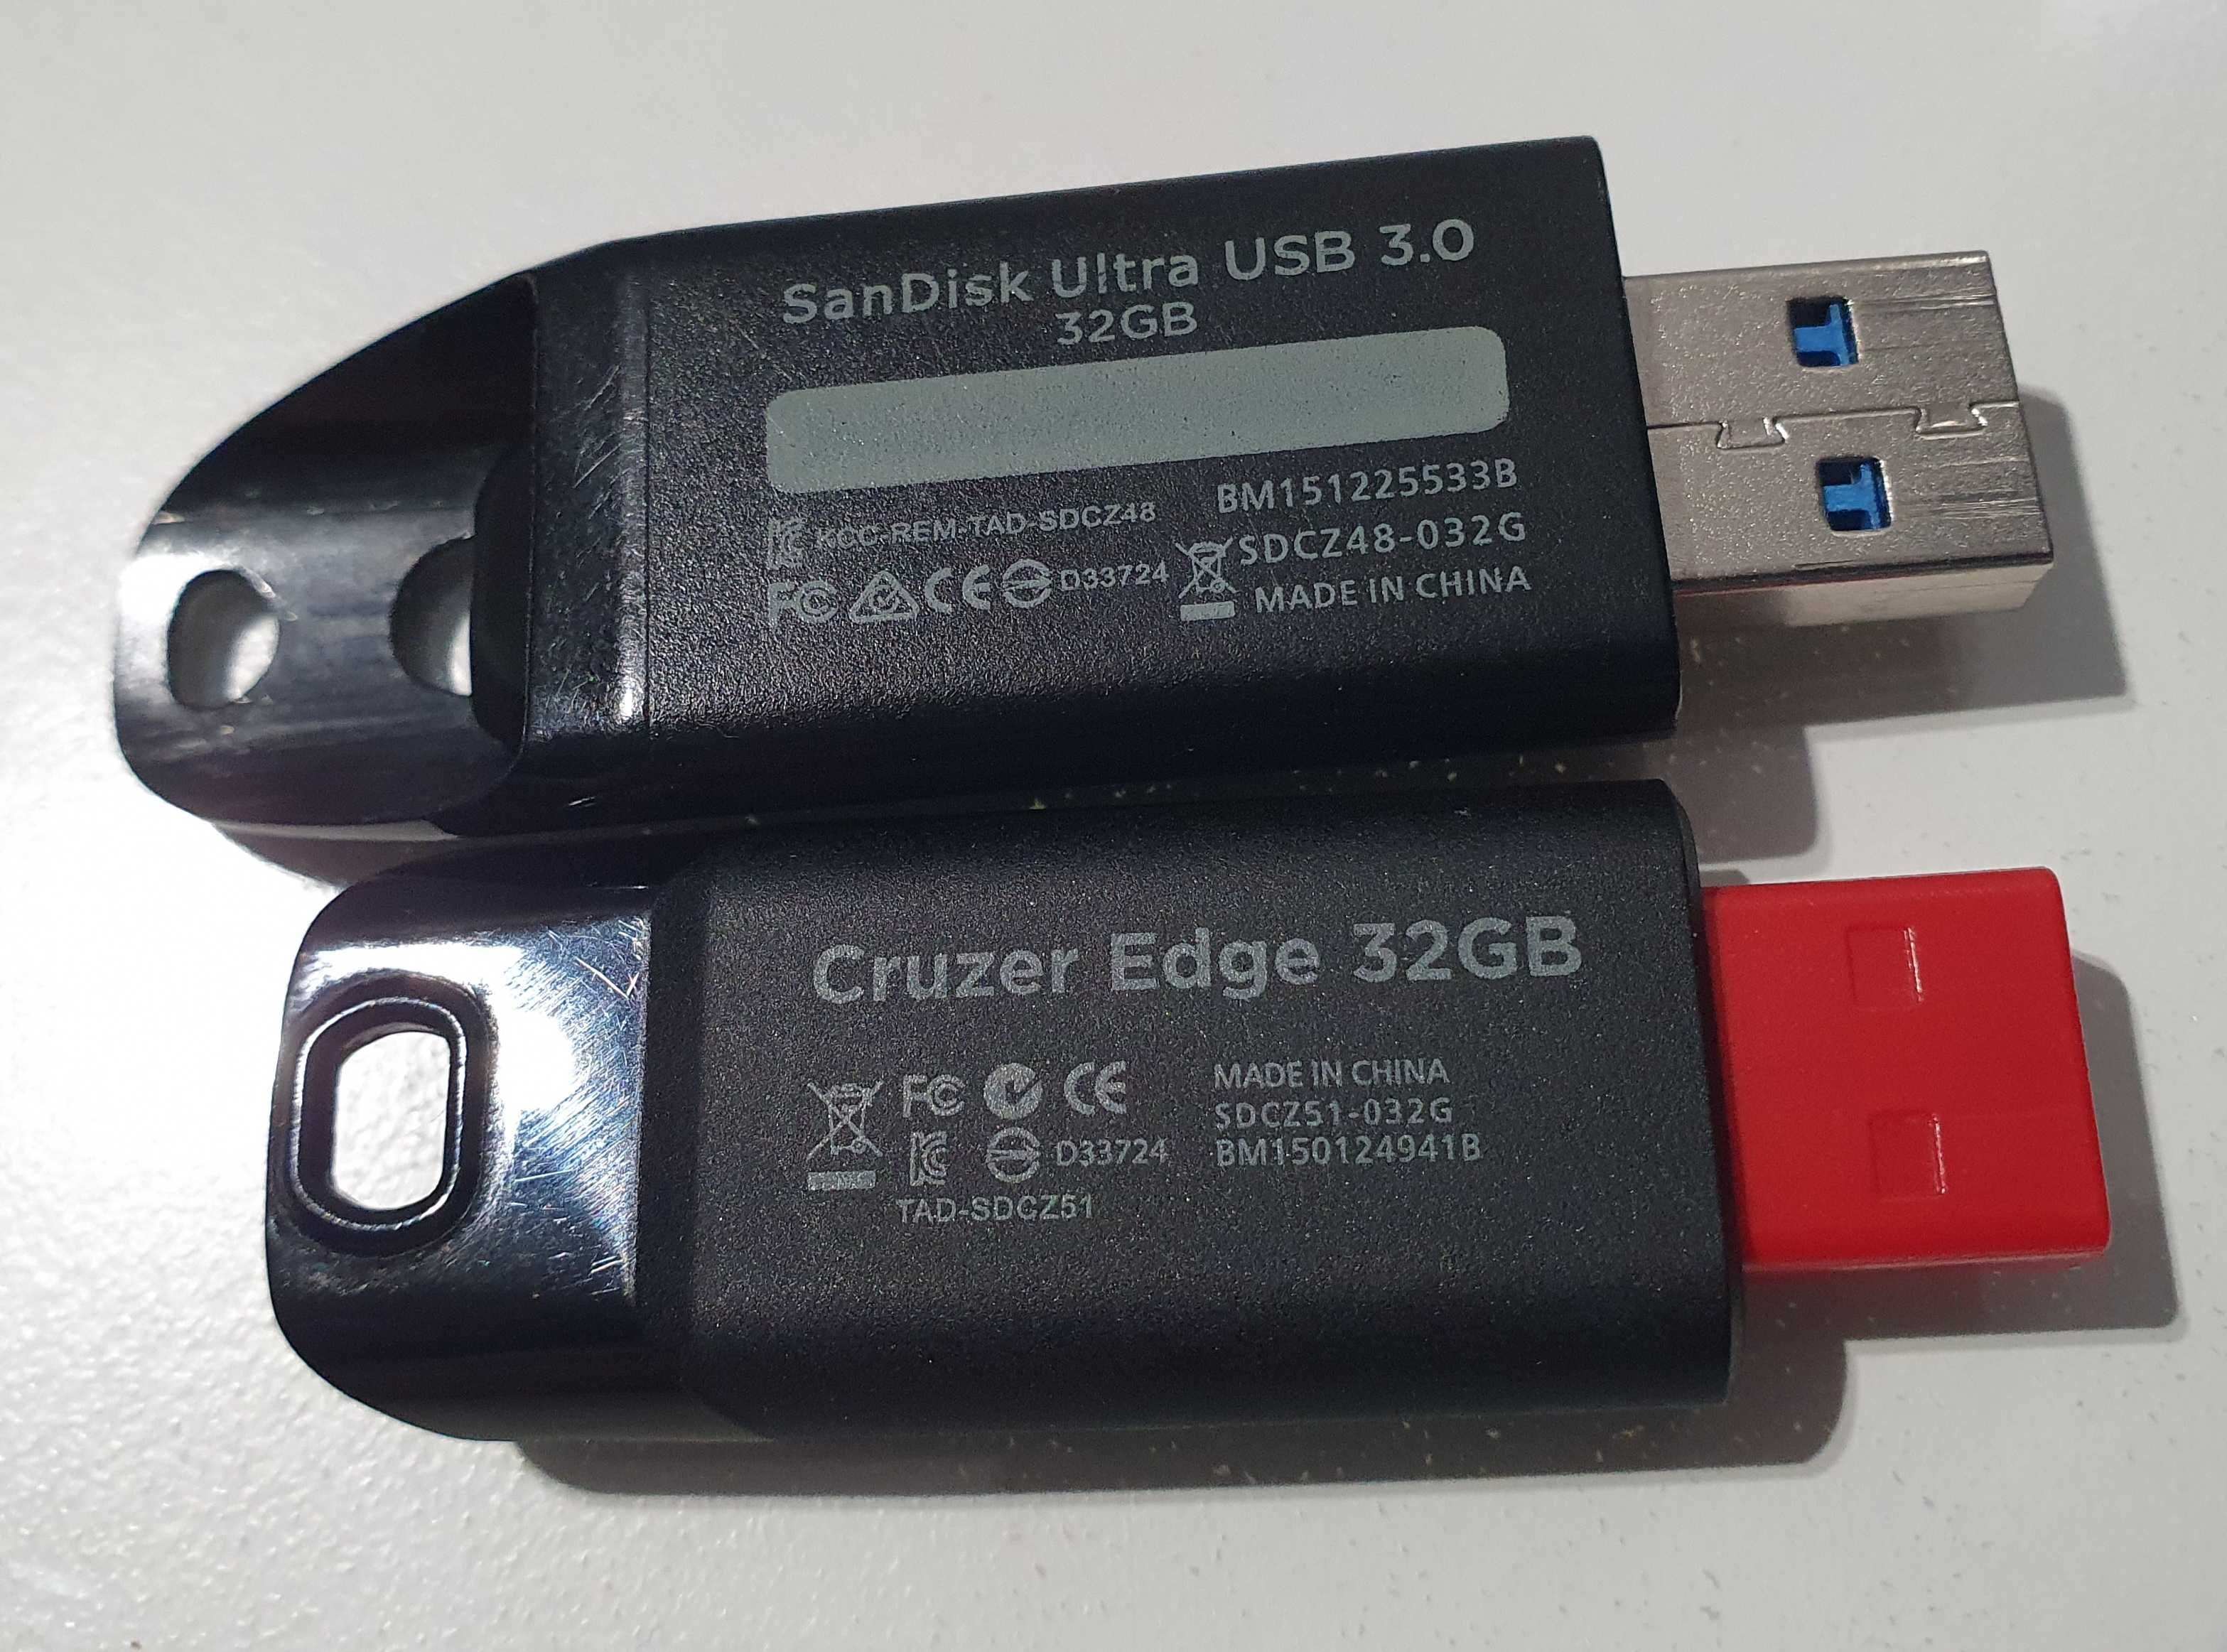 2 x Dysk Pendrive ssd Sandisk Ultra 32gb i Cruzer Edge 32gb = 64gb